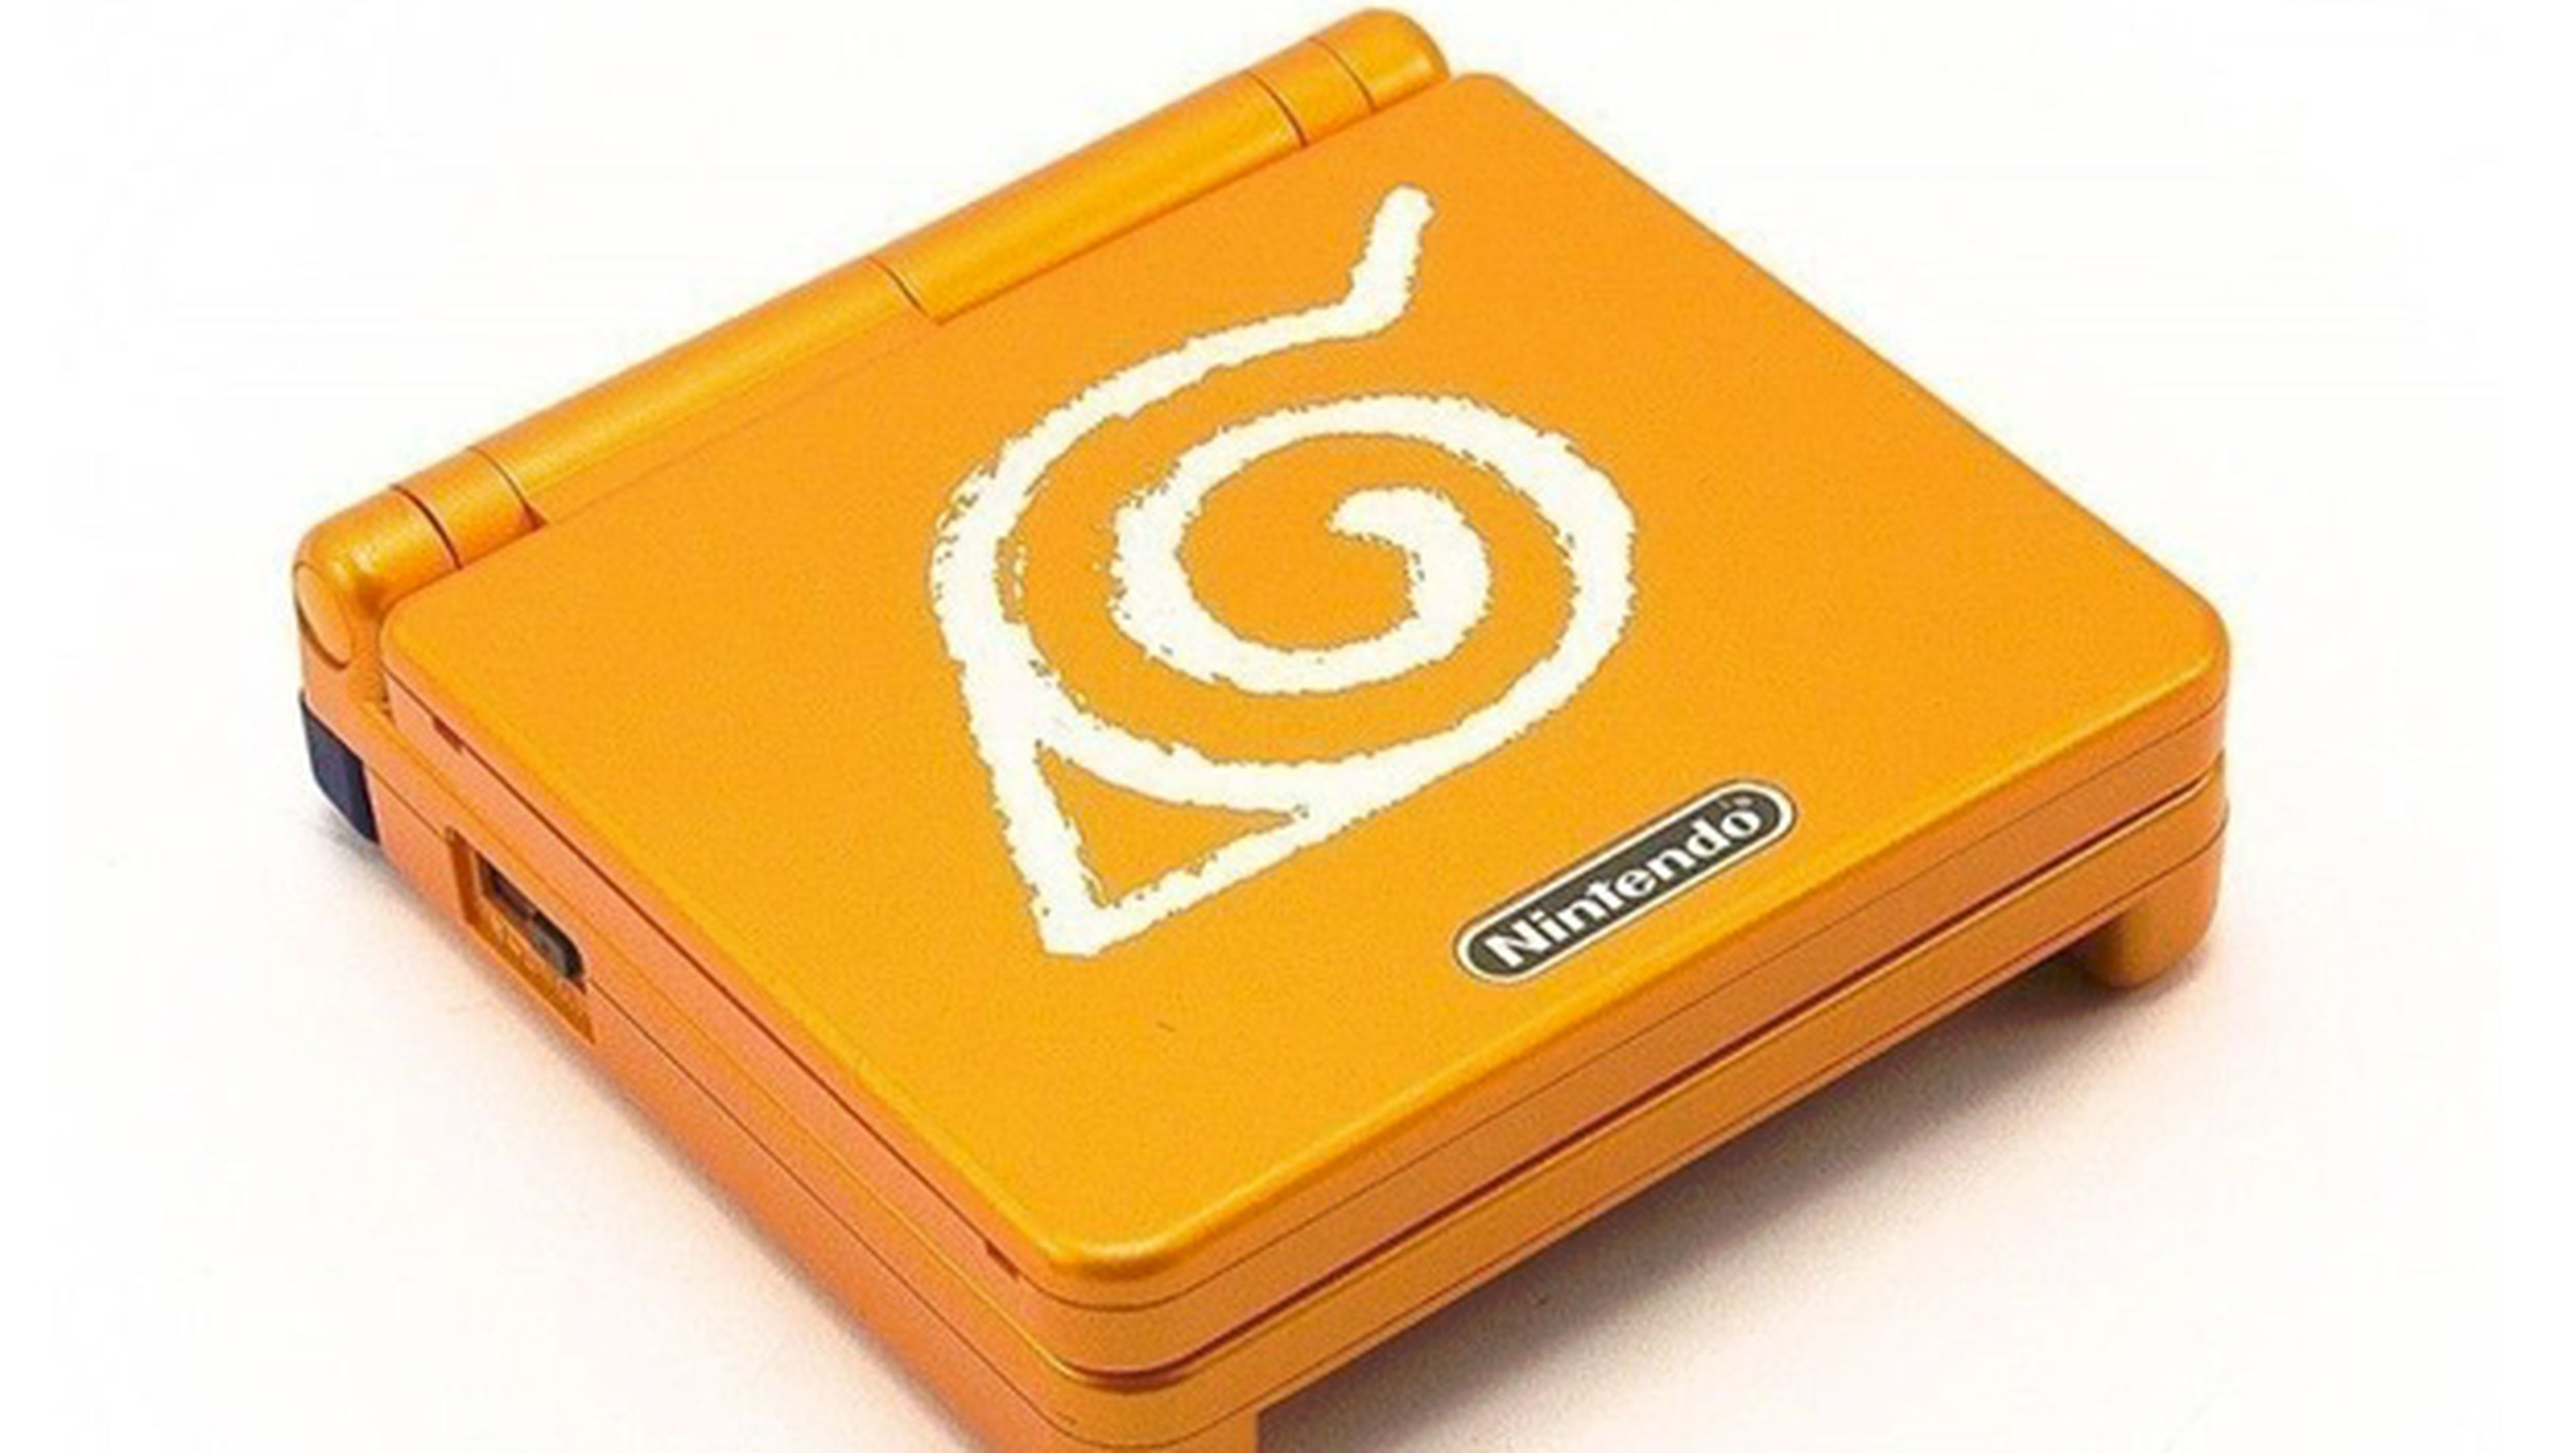 Game Boy Advance SP Naruto Edition